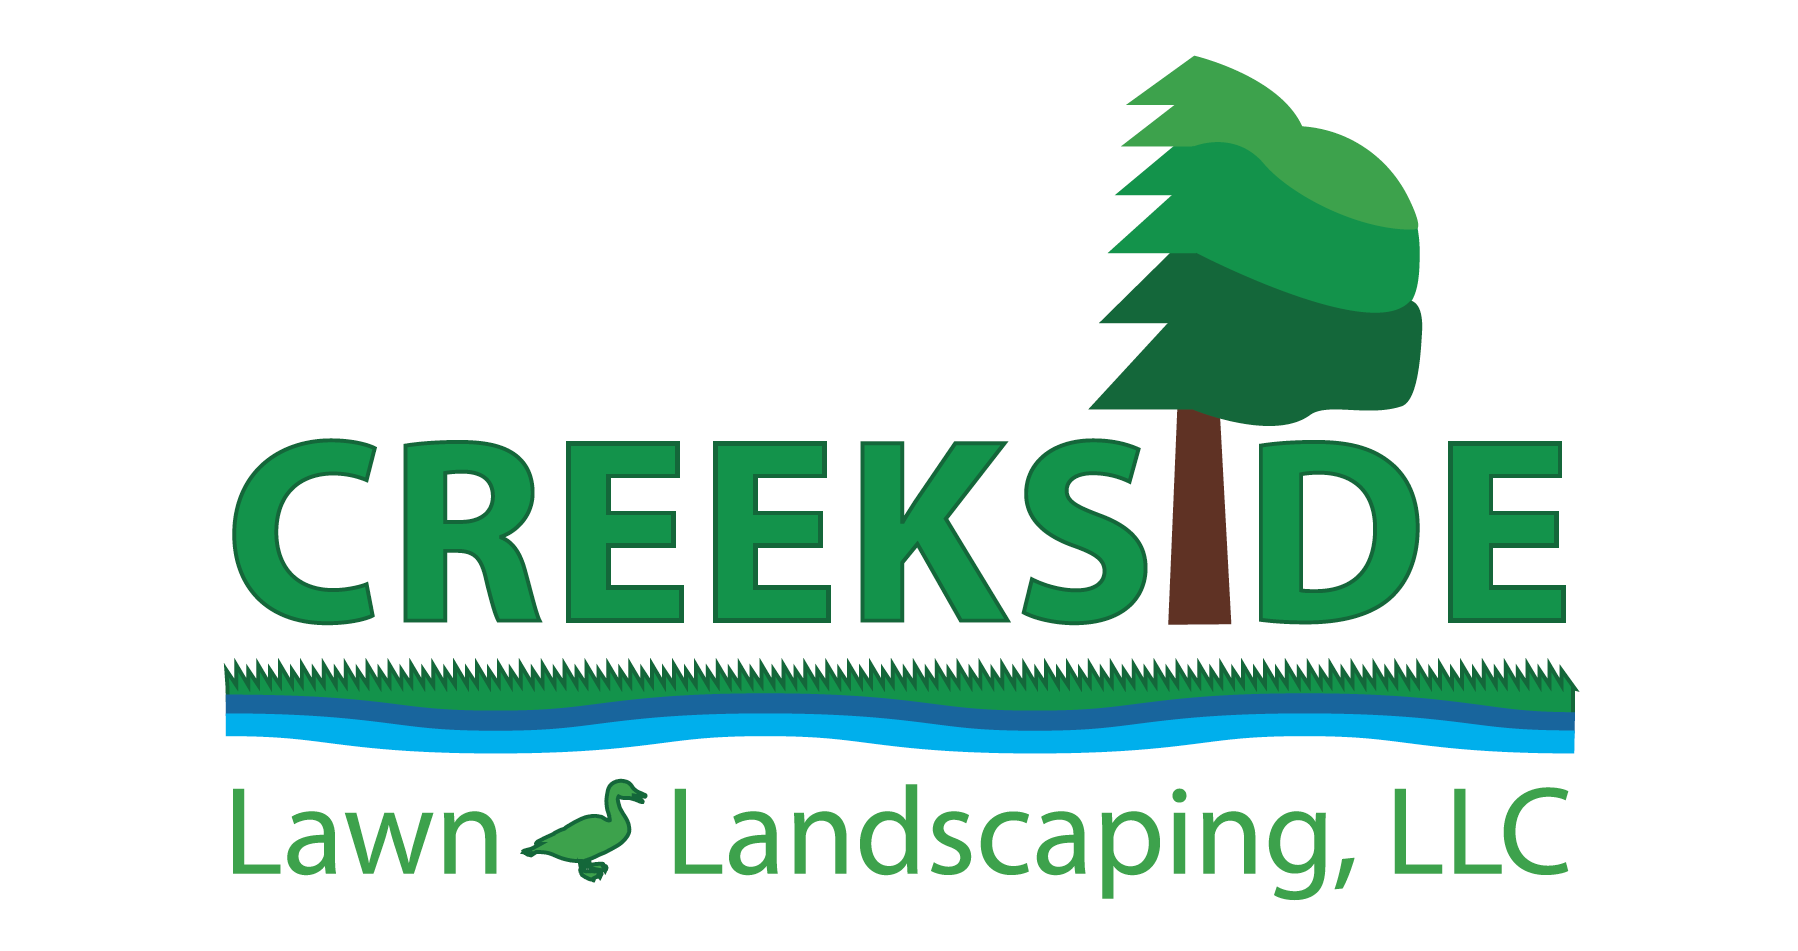 Creekside Lawn & Landscaping, LLC